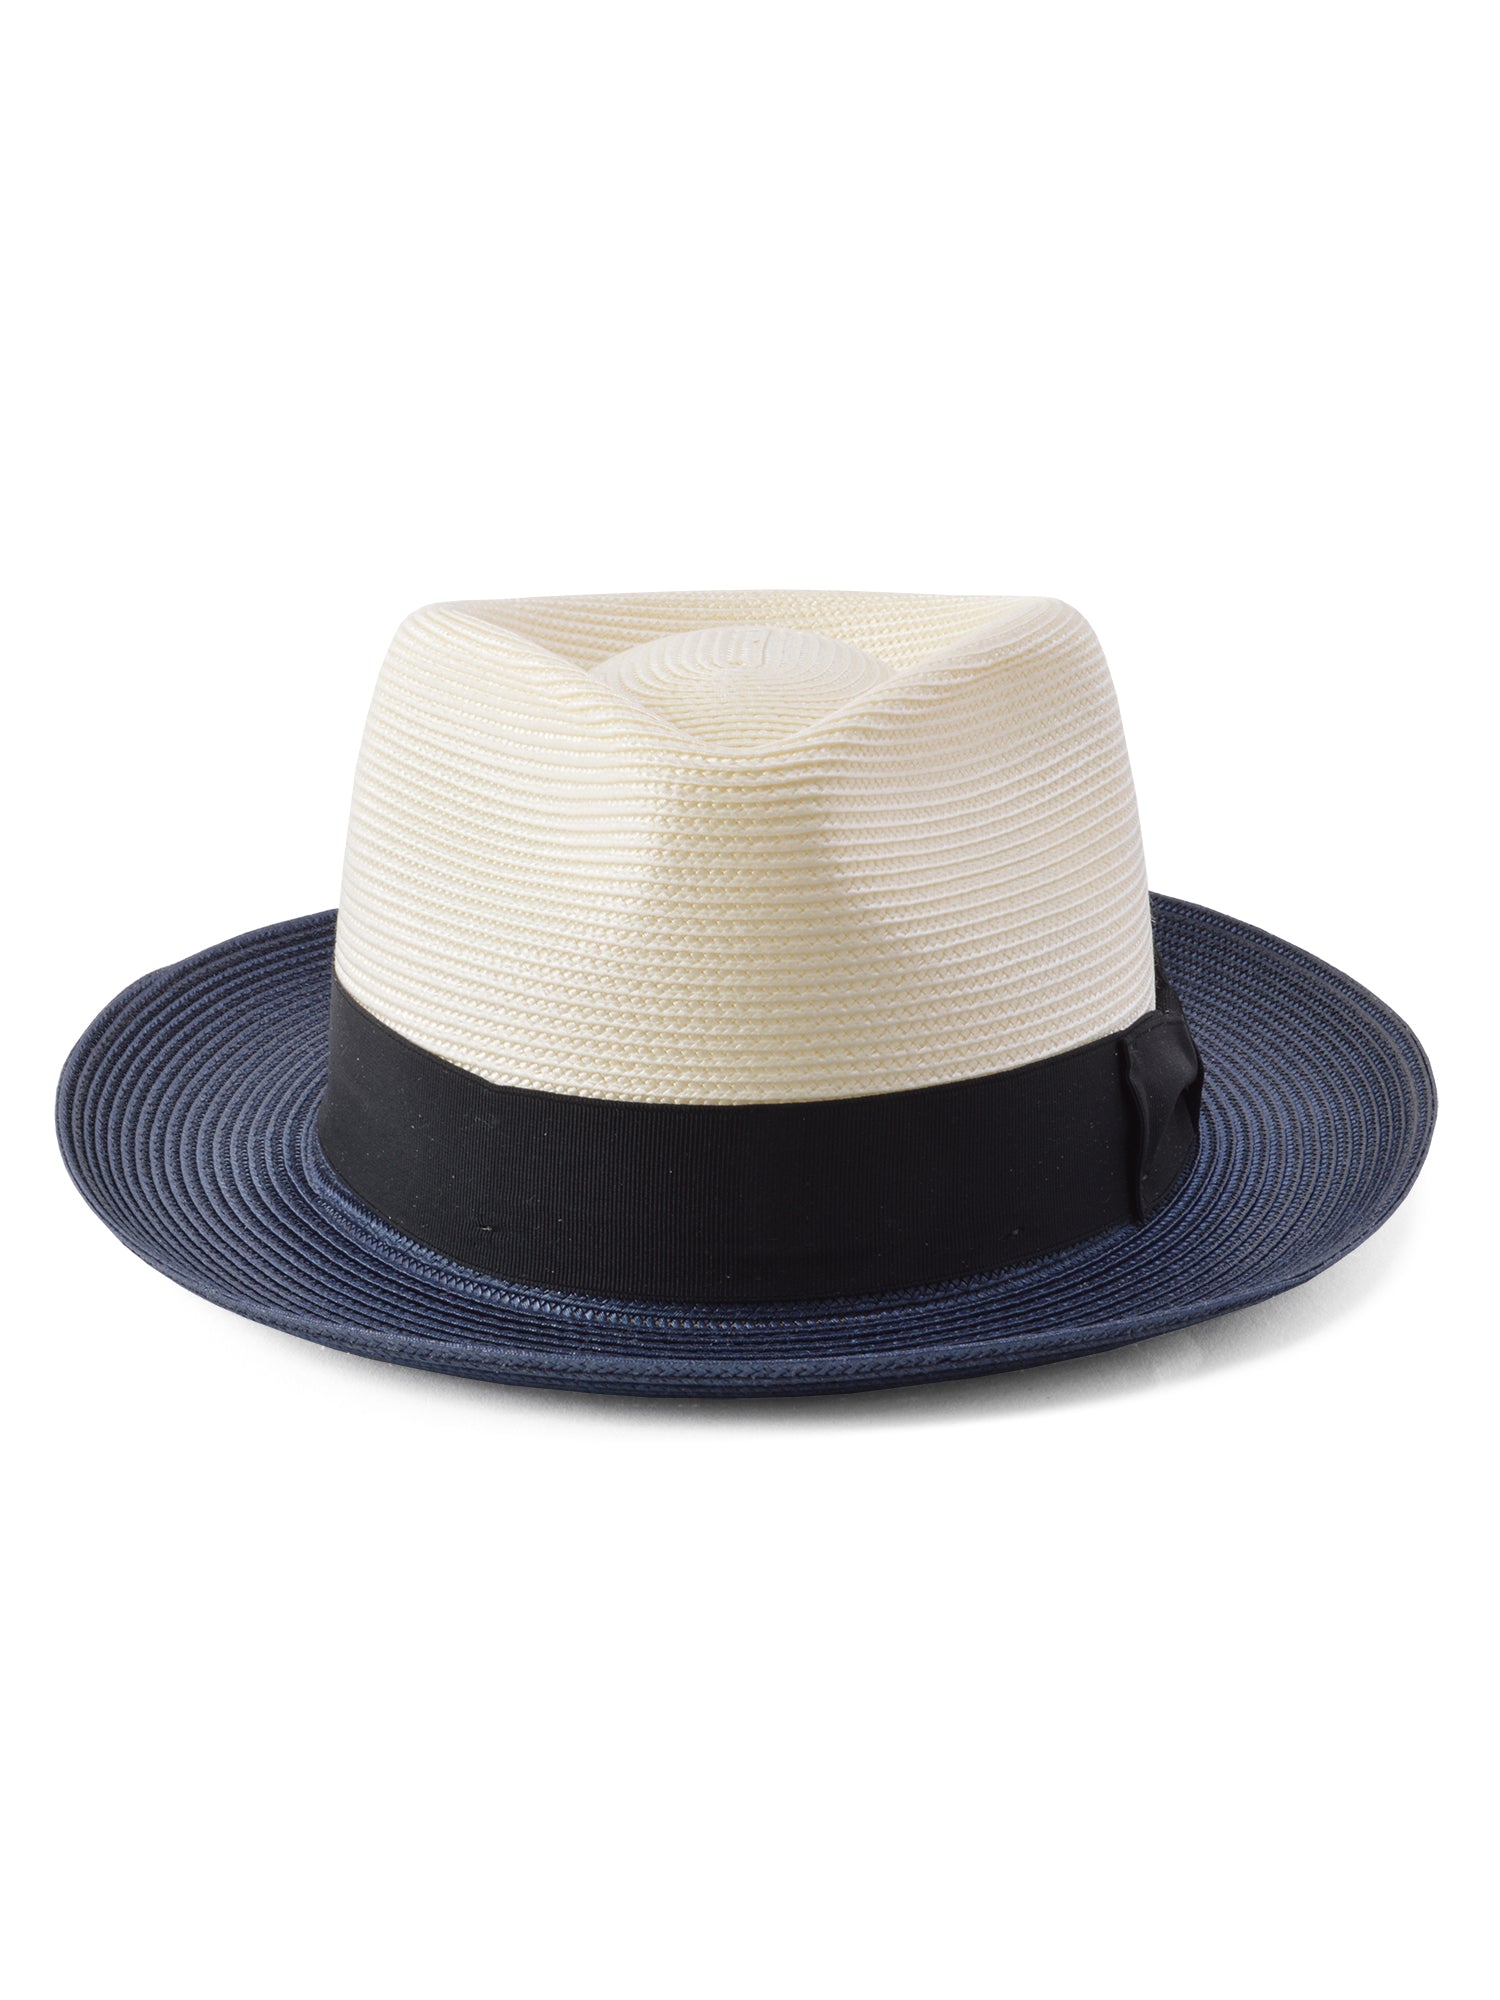 Stetson Dutoni Straw Hat in Ivory / Navy